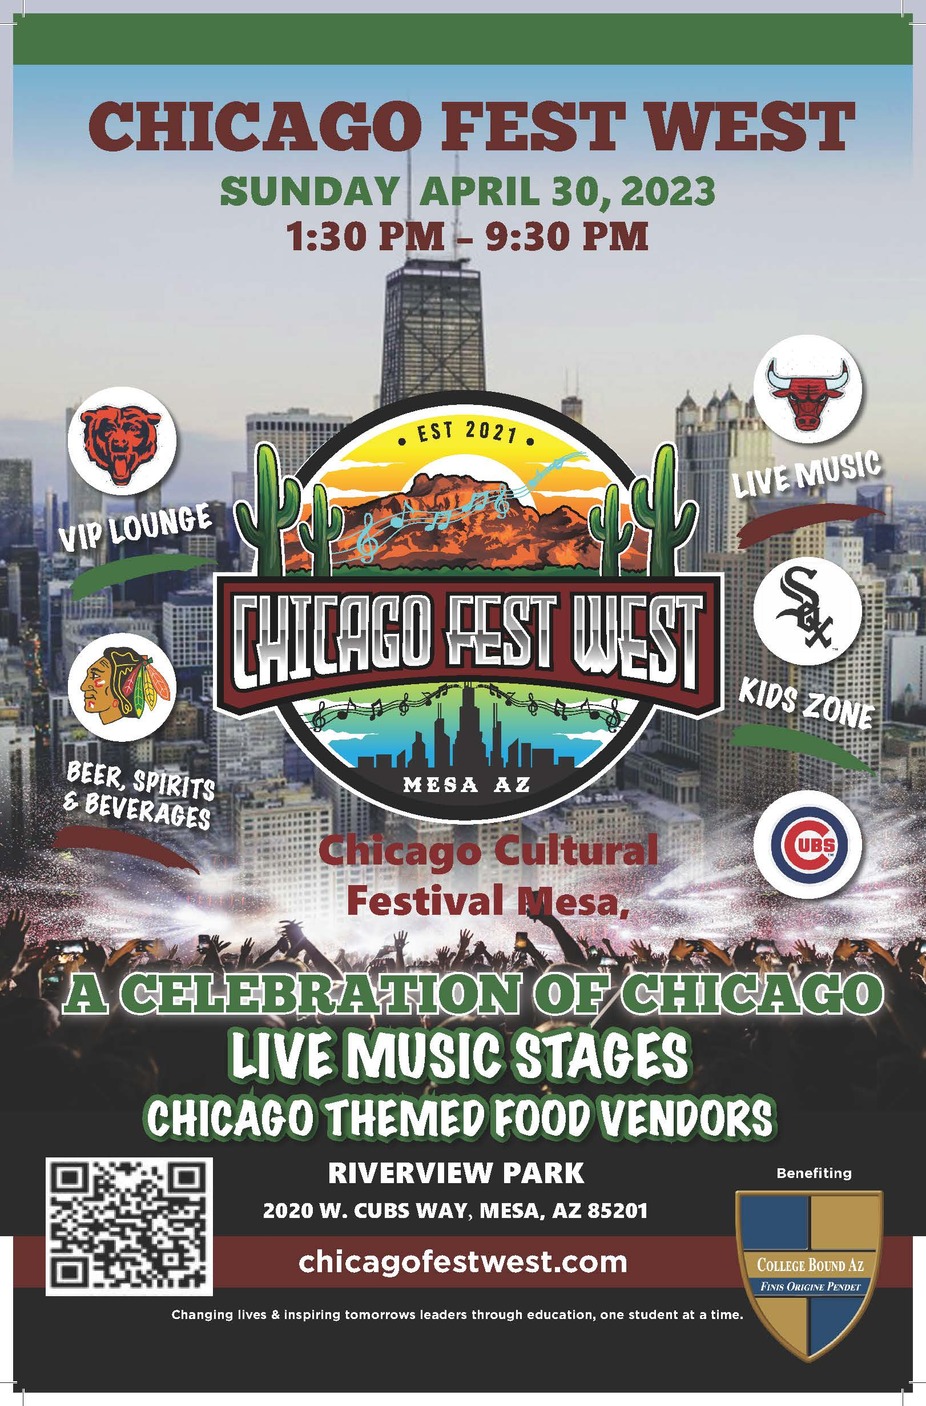 Chicago Fest West event photo